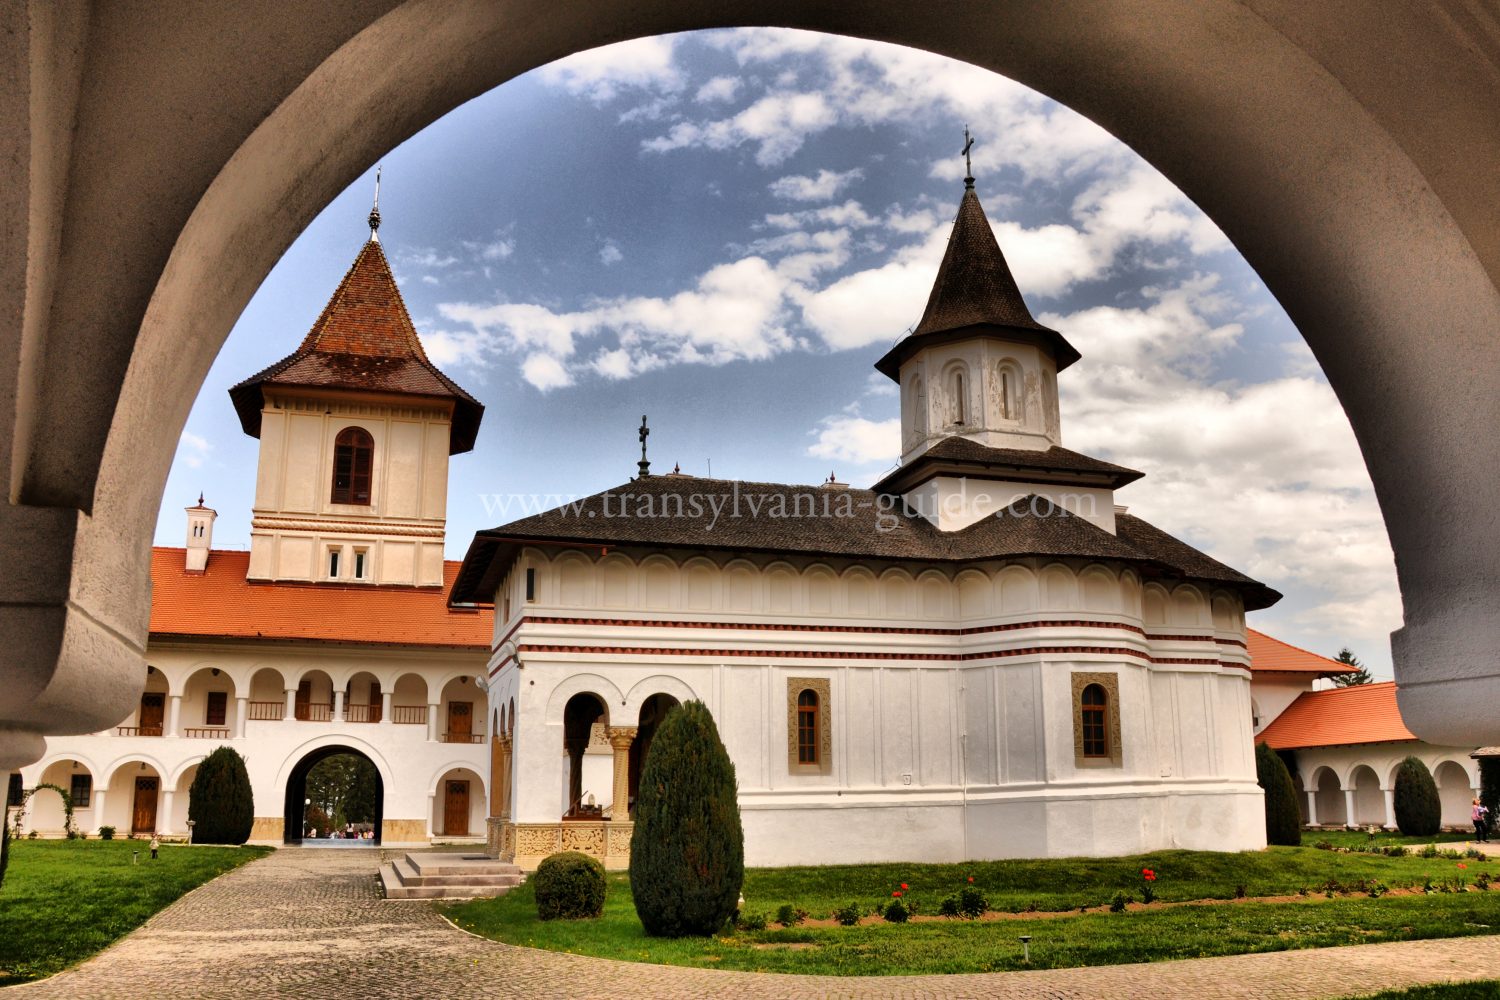 Brancoveanu Orthodox Monastery